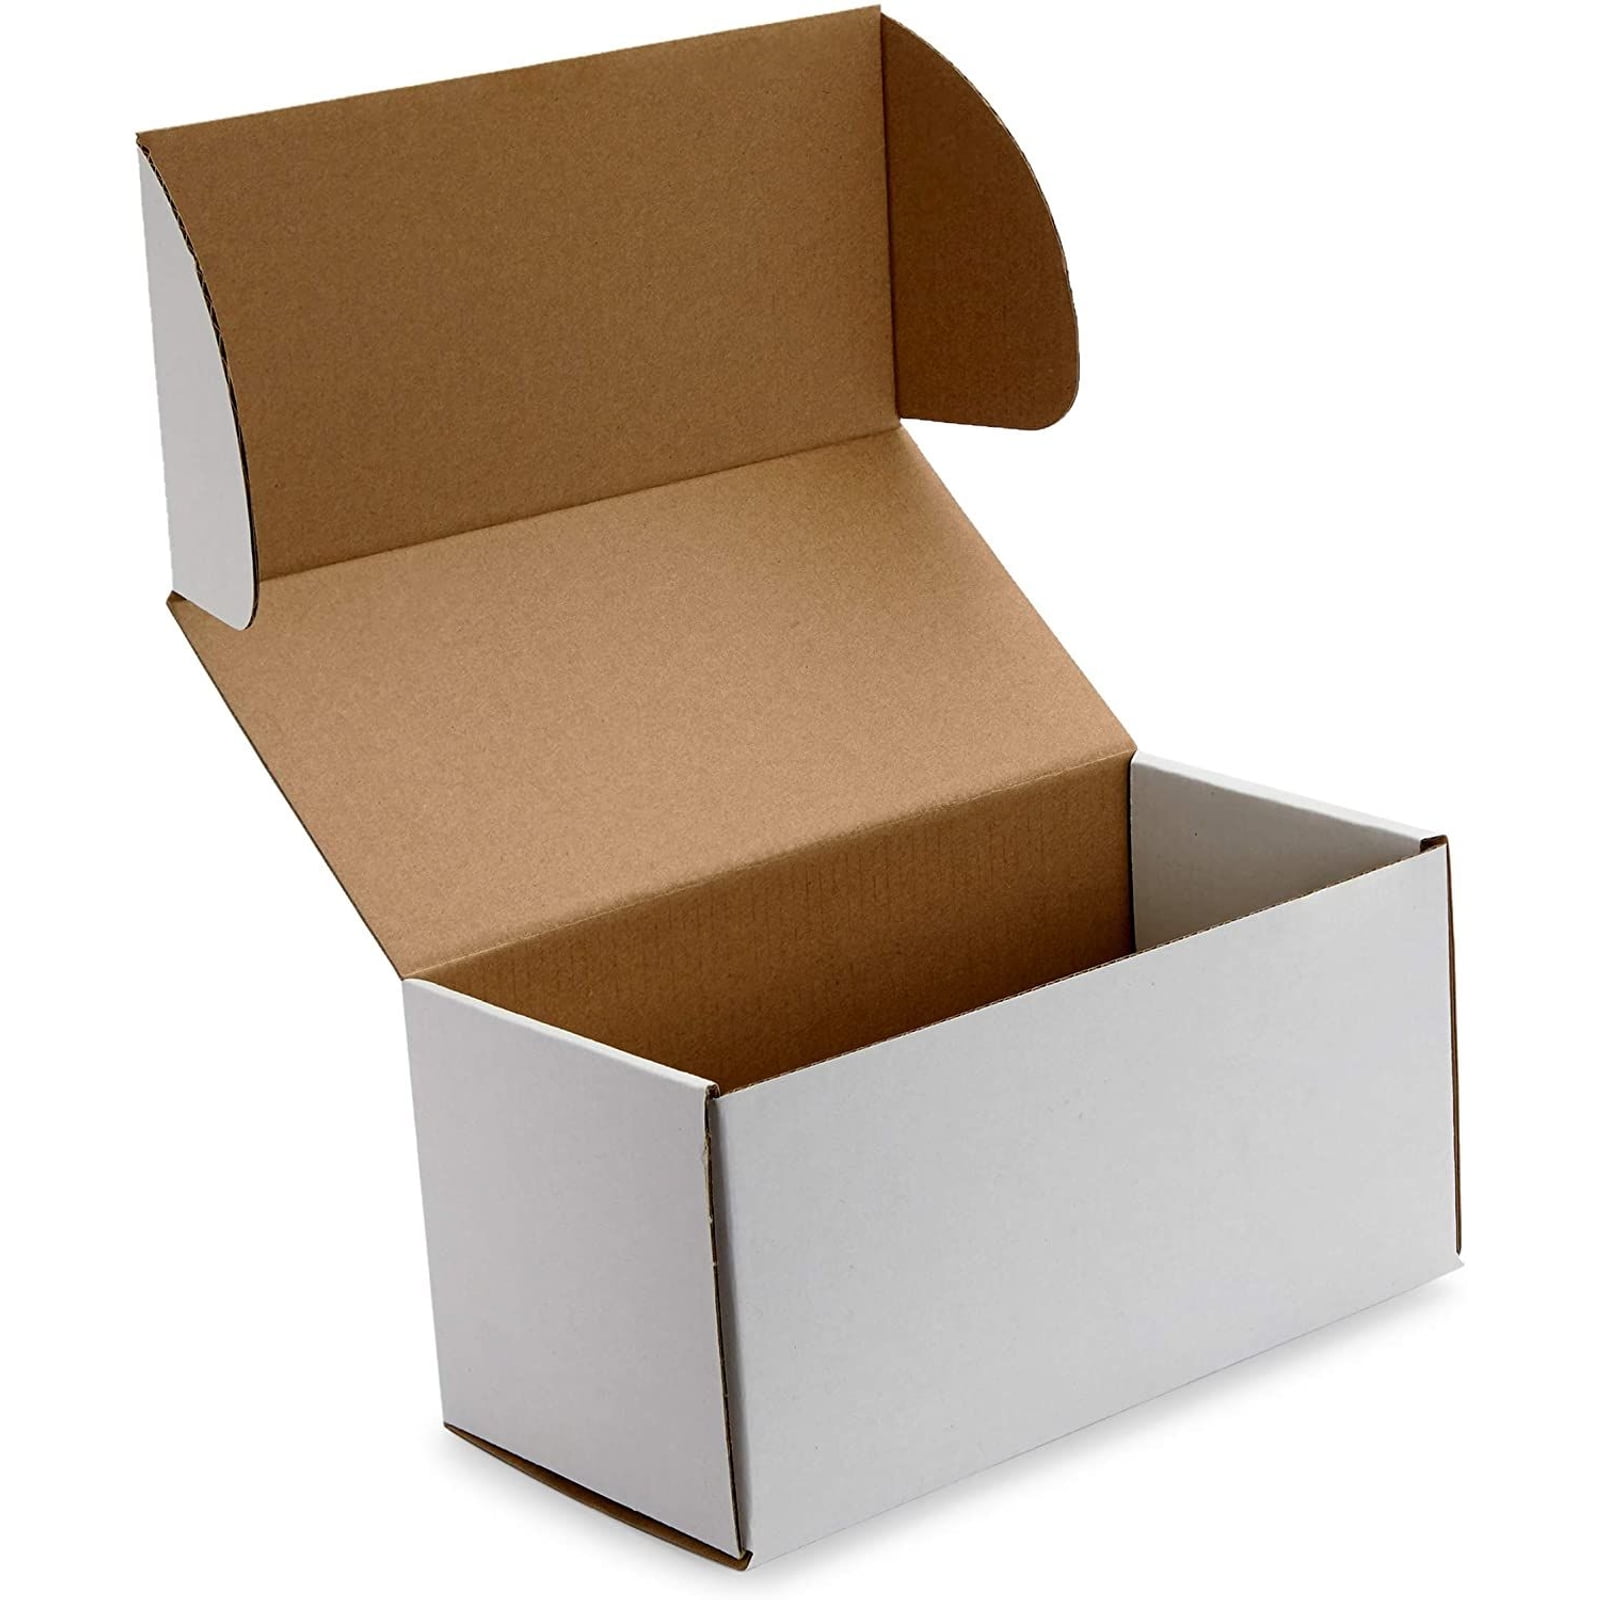 5 Brown Corrugated Shipping Box 8x4x3 Sunglasses Cardboard Carton Packing Mailer 